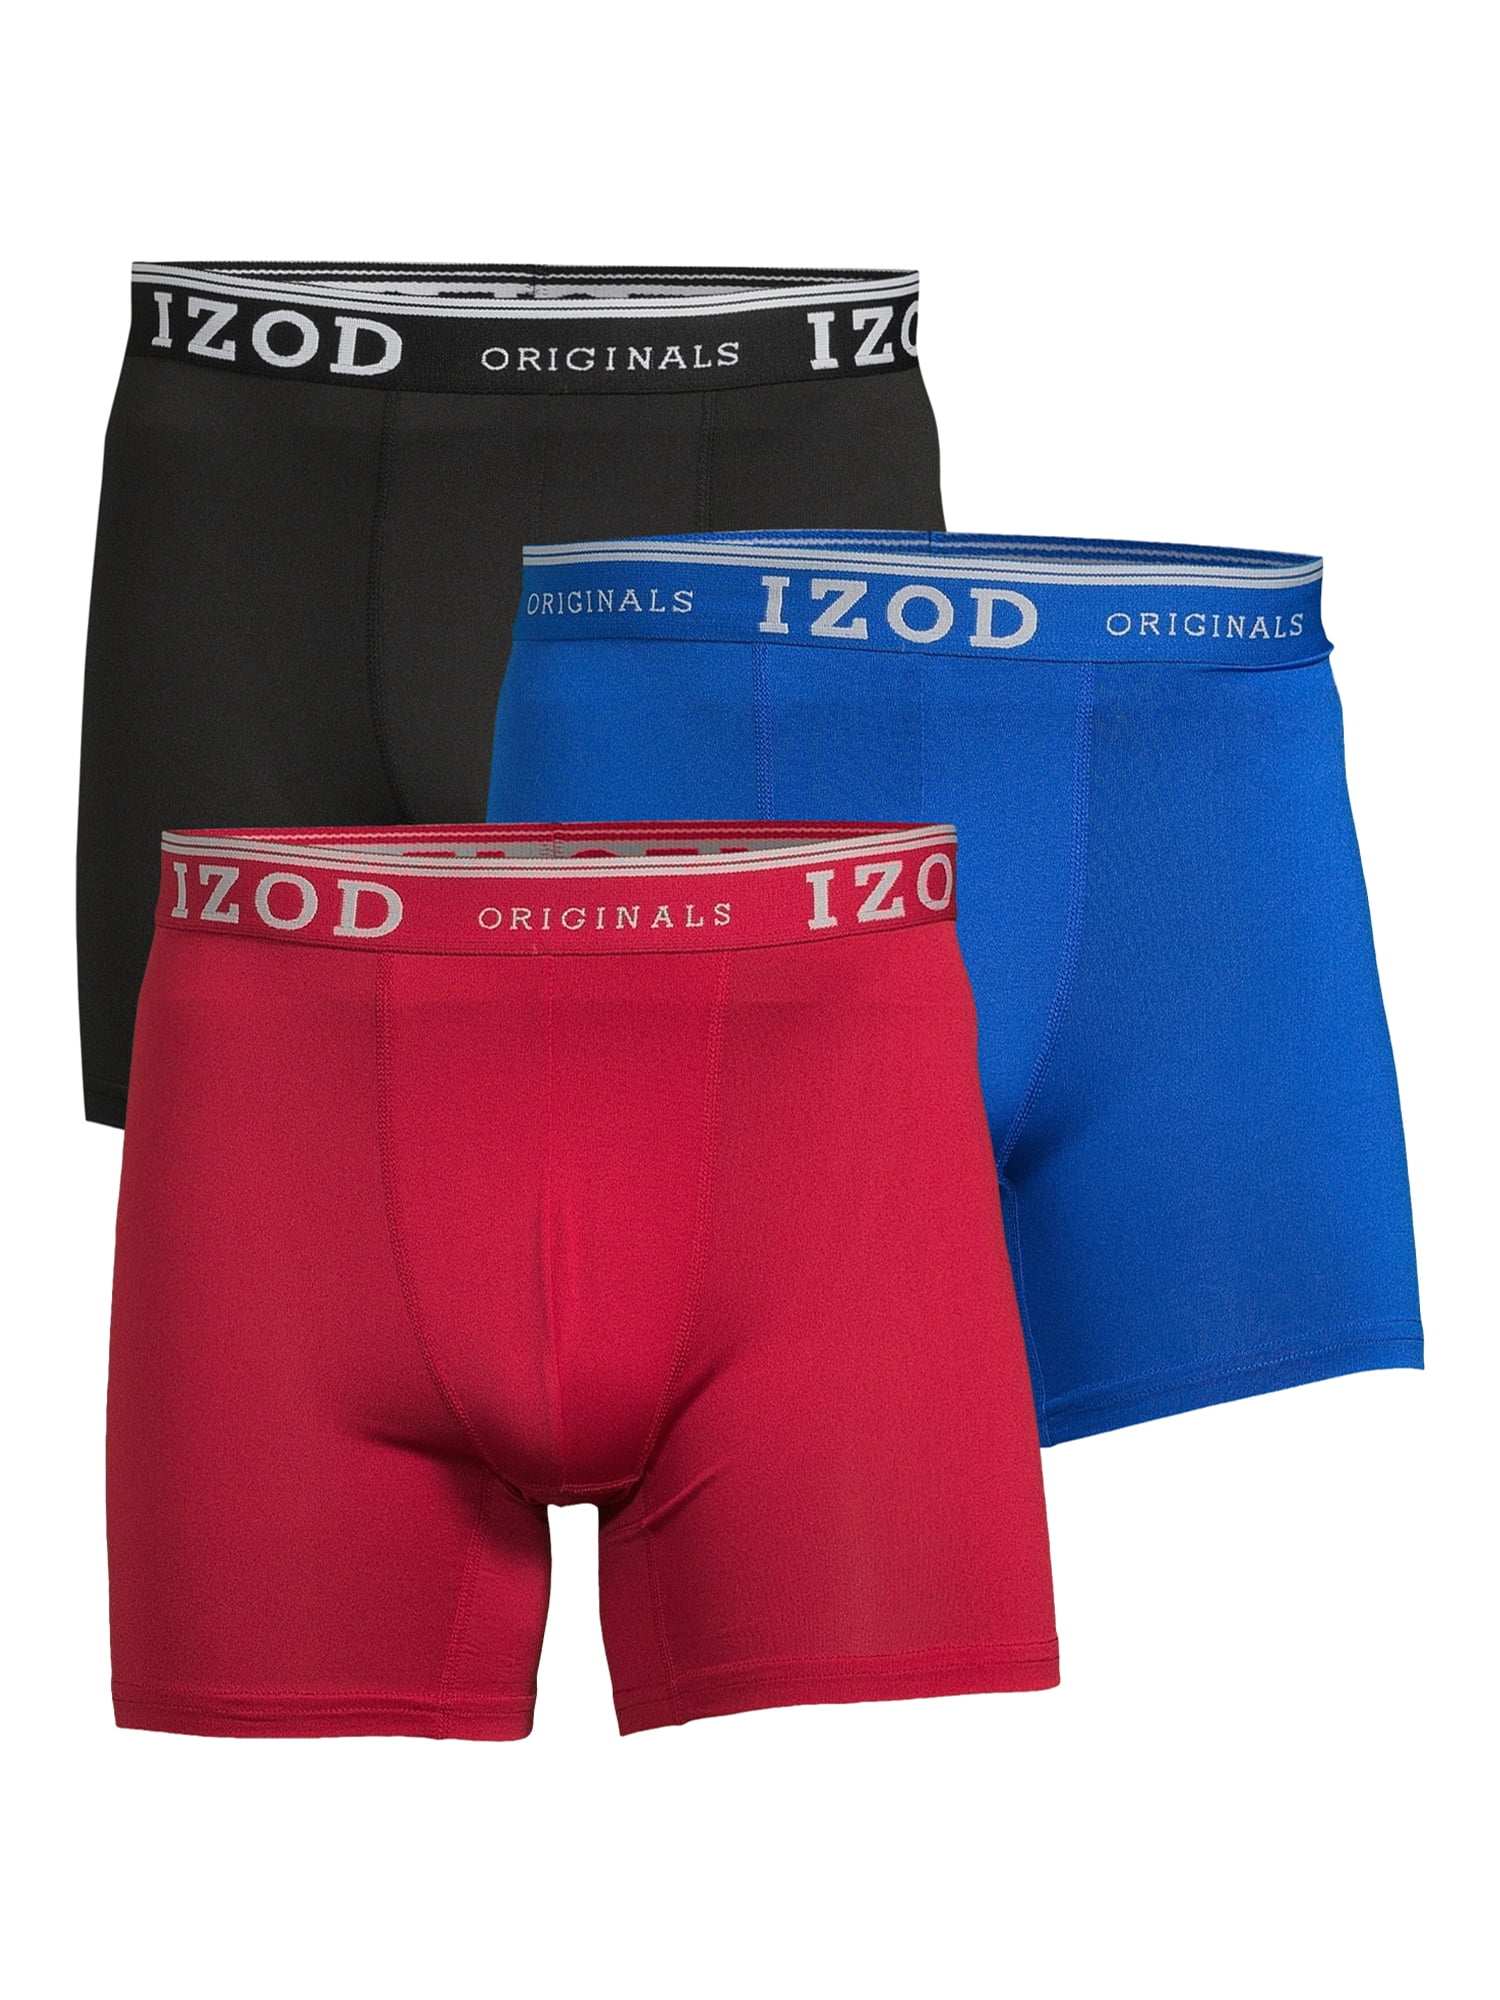 IZOD Men's Boxer Briefs, 3-Pack 